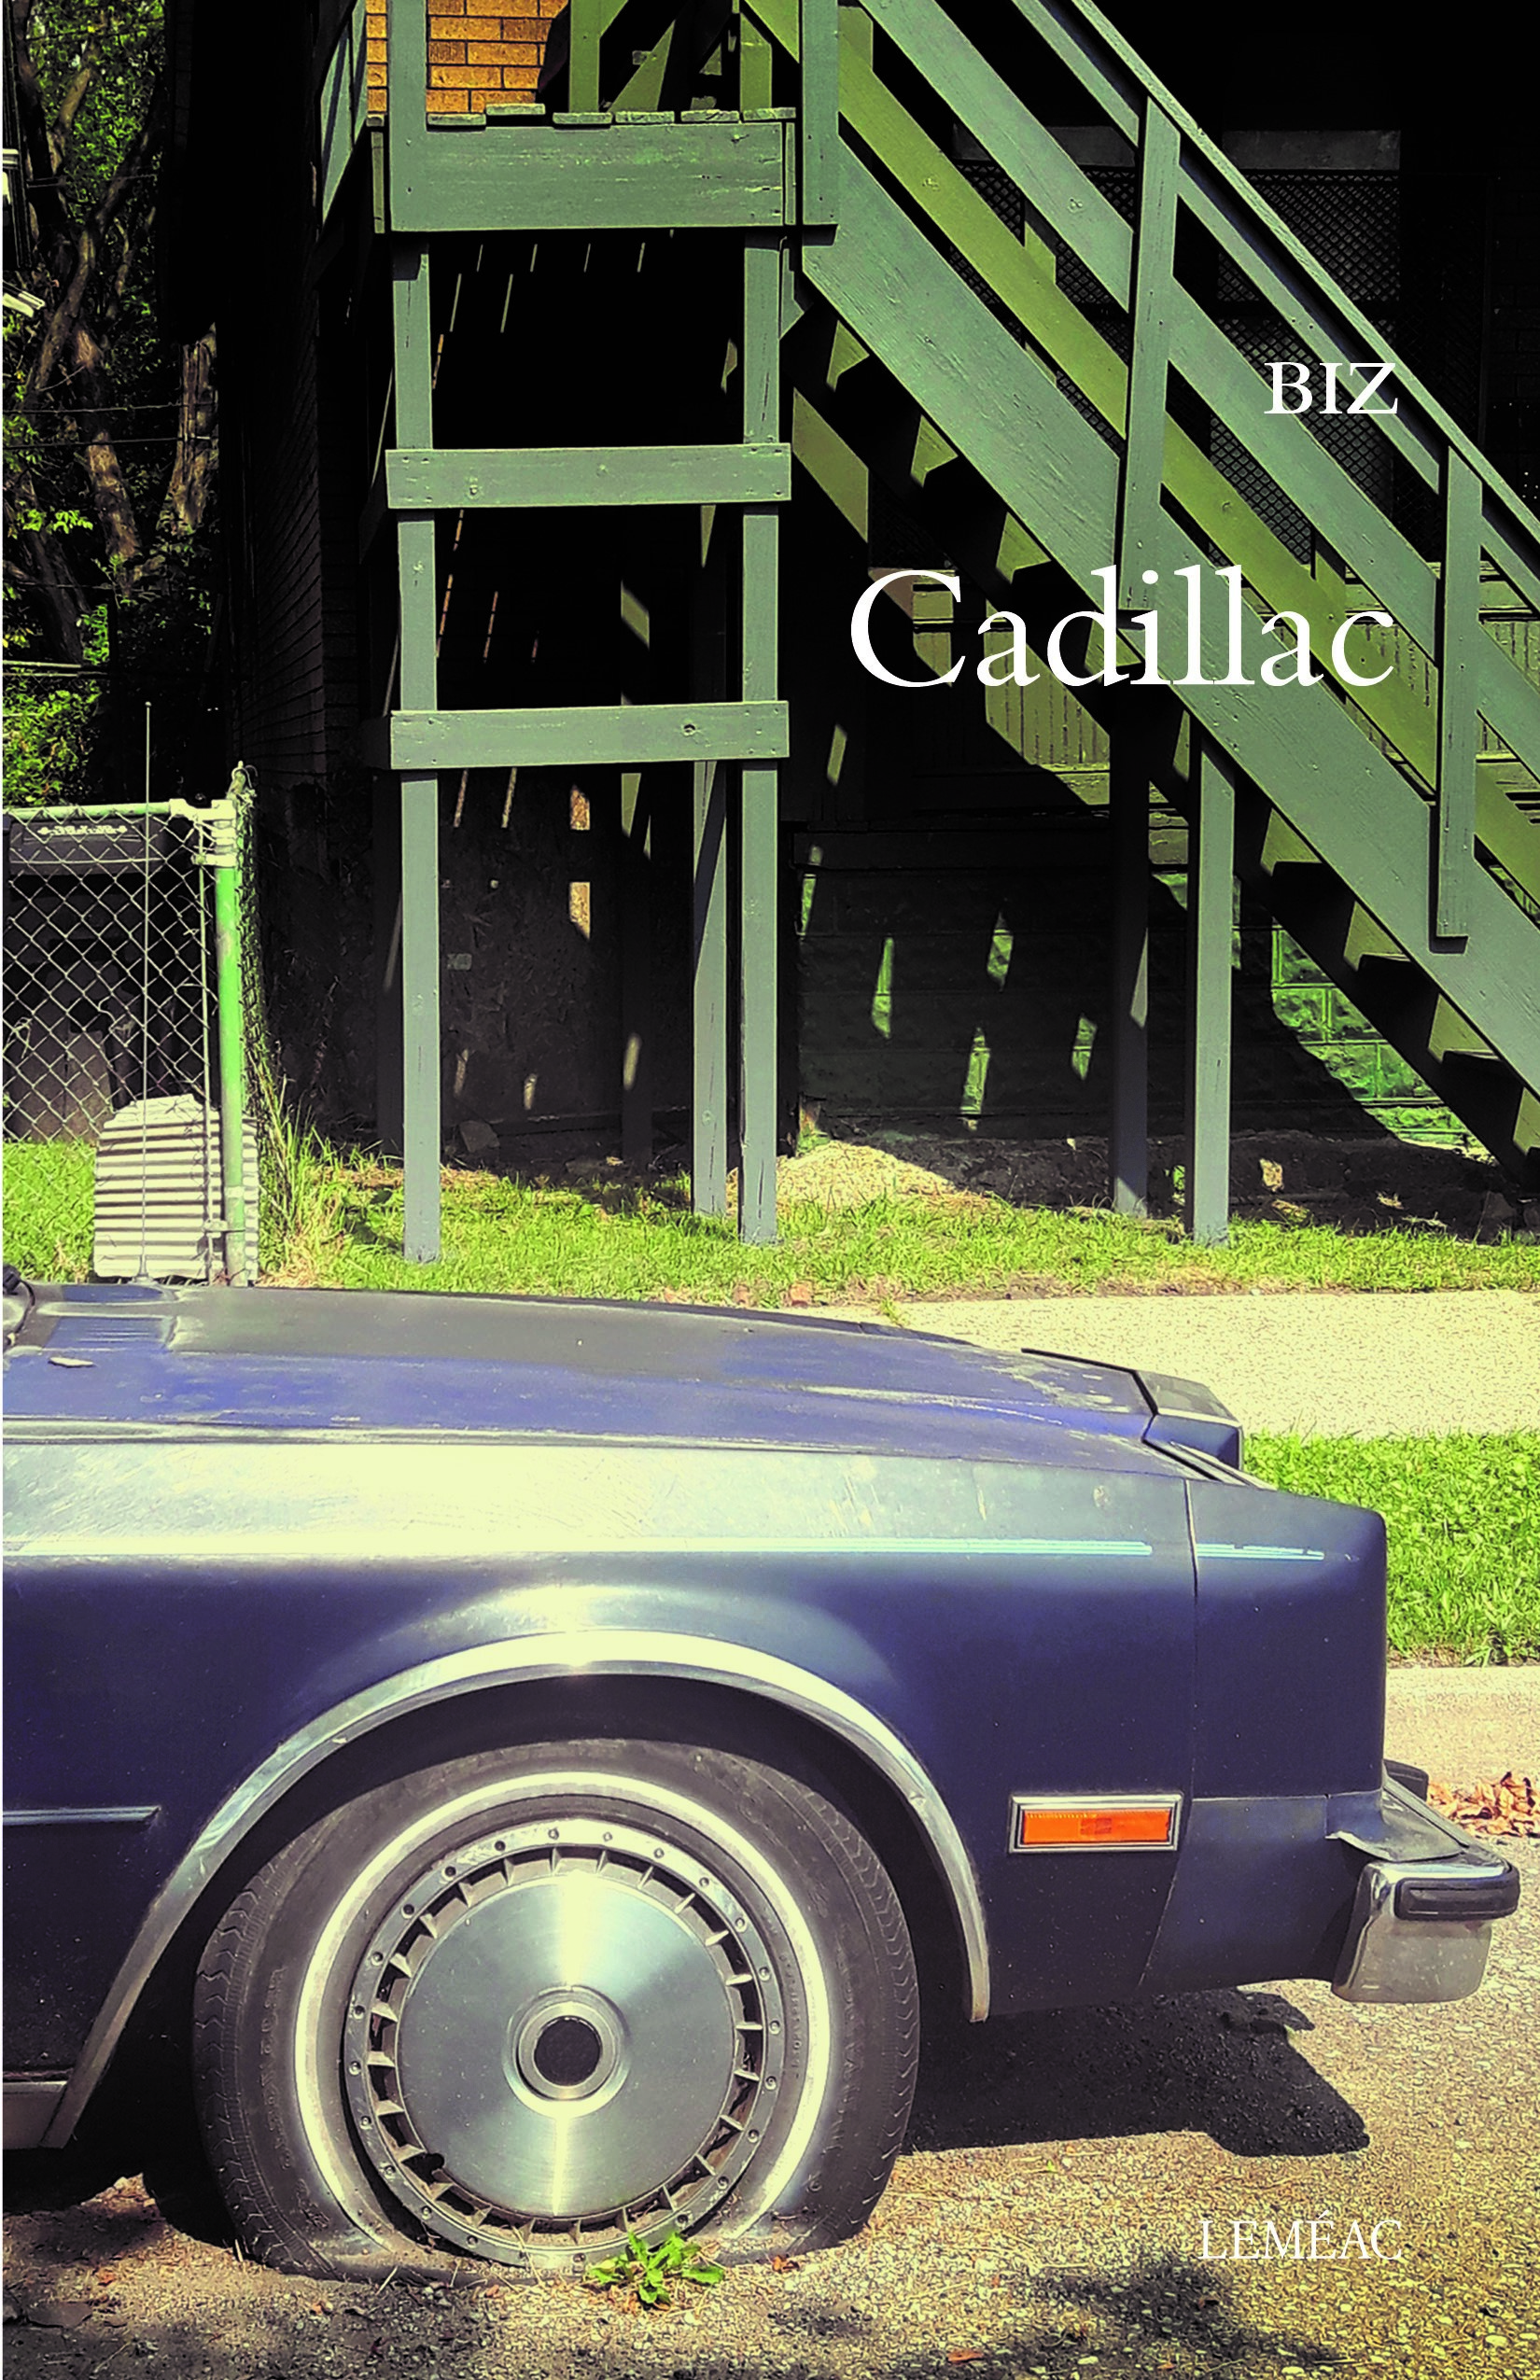 alt="Cadillac-biz"